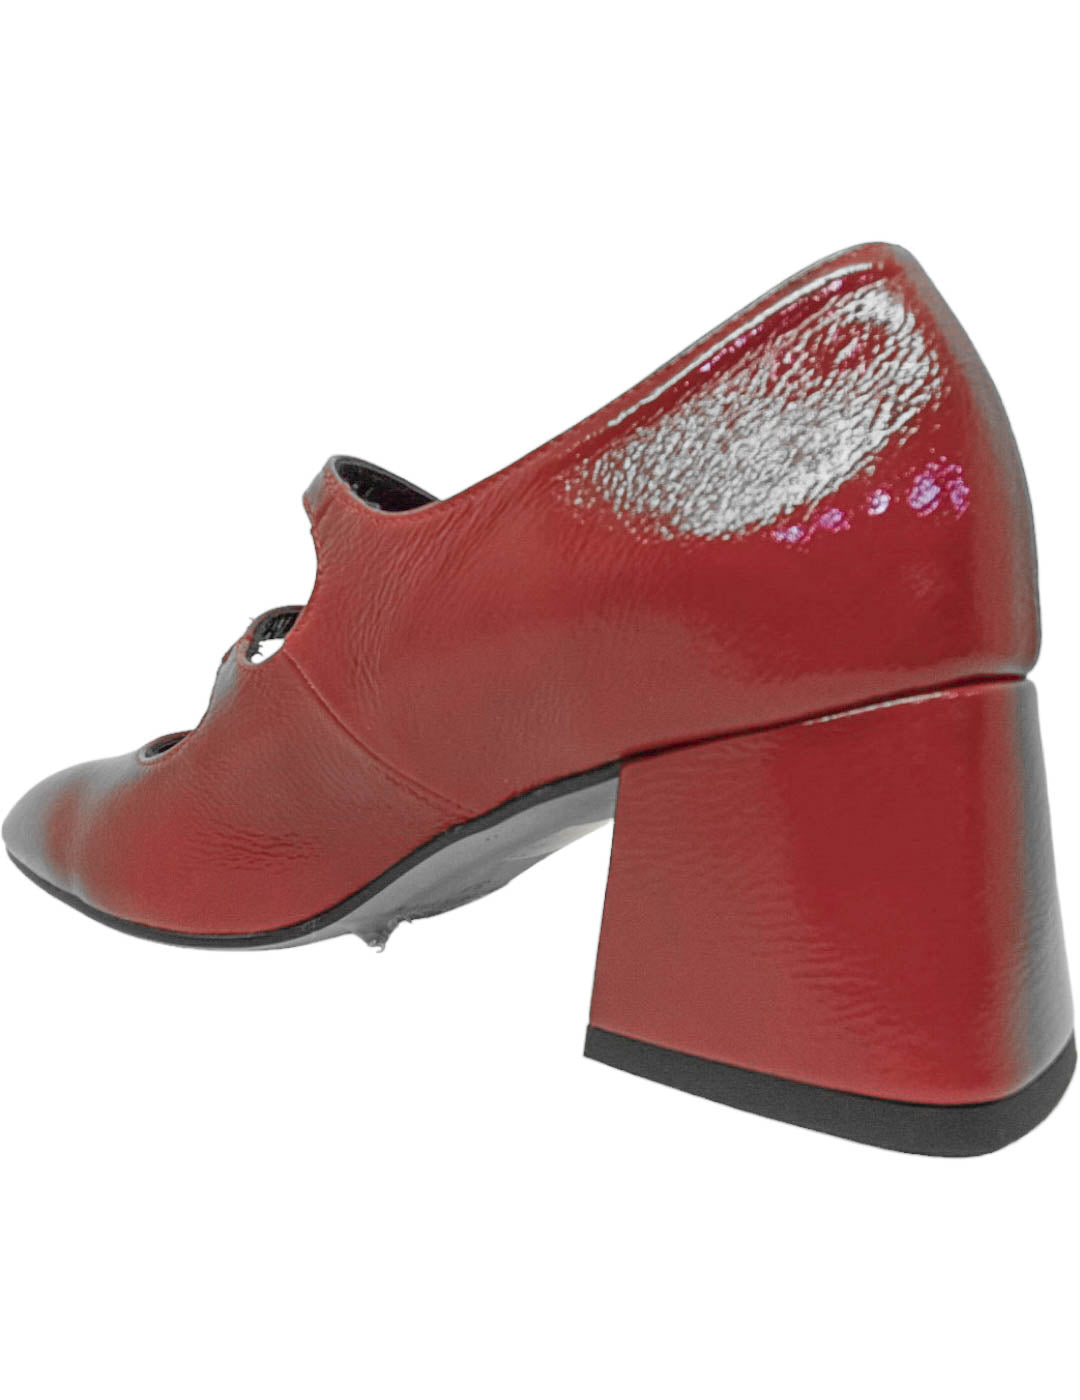 Zapato merceditas juliet marian rojo